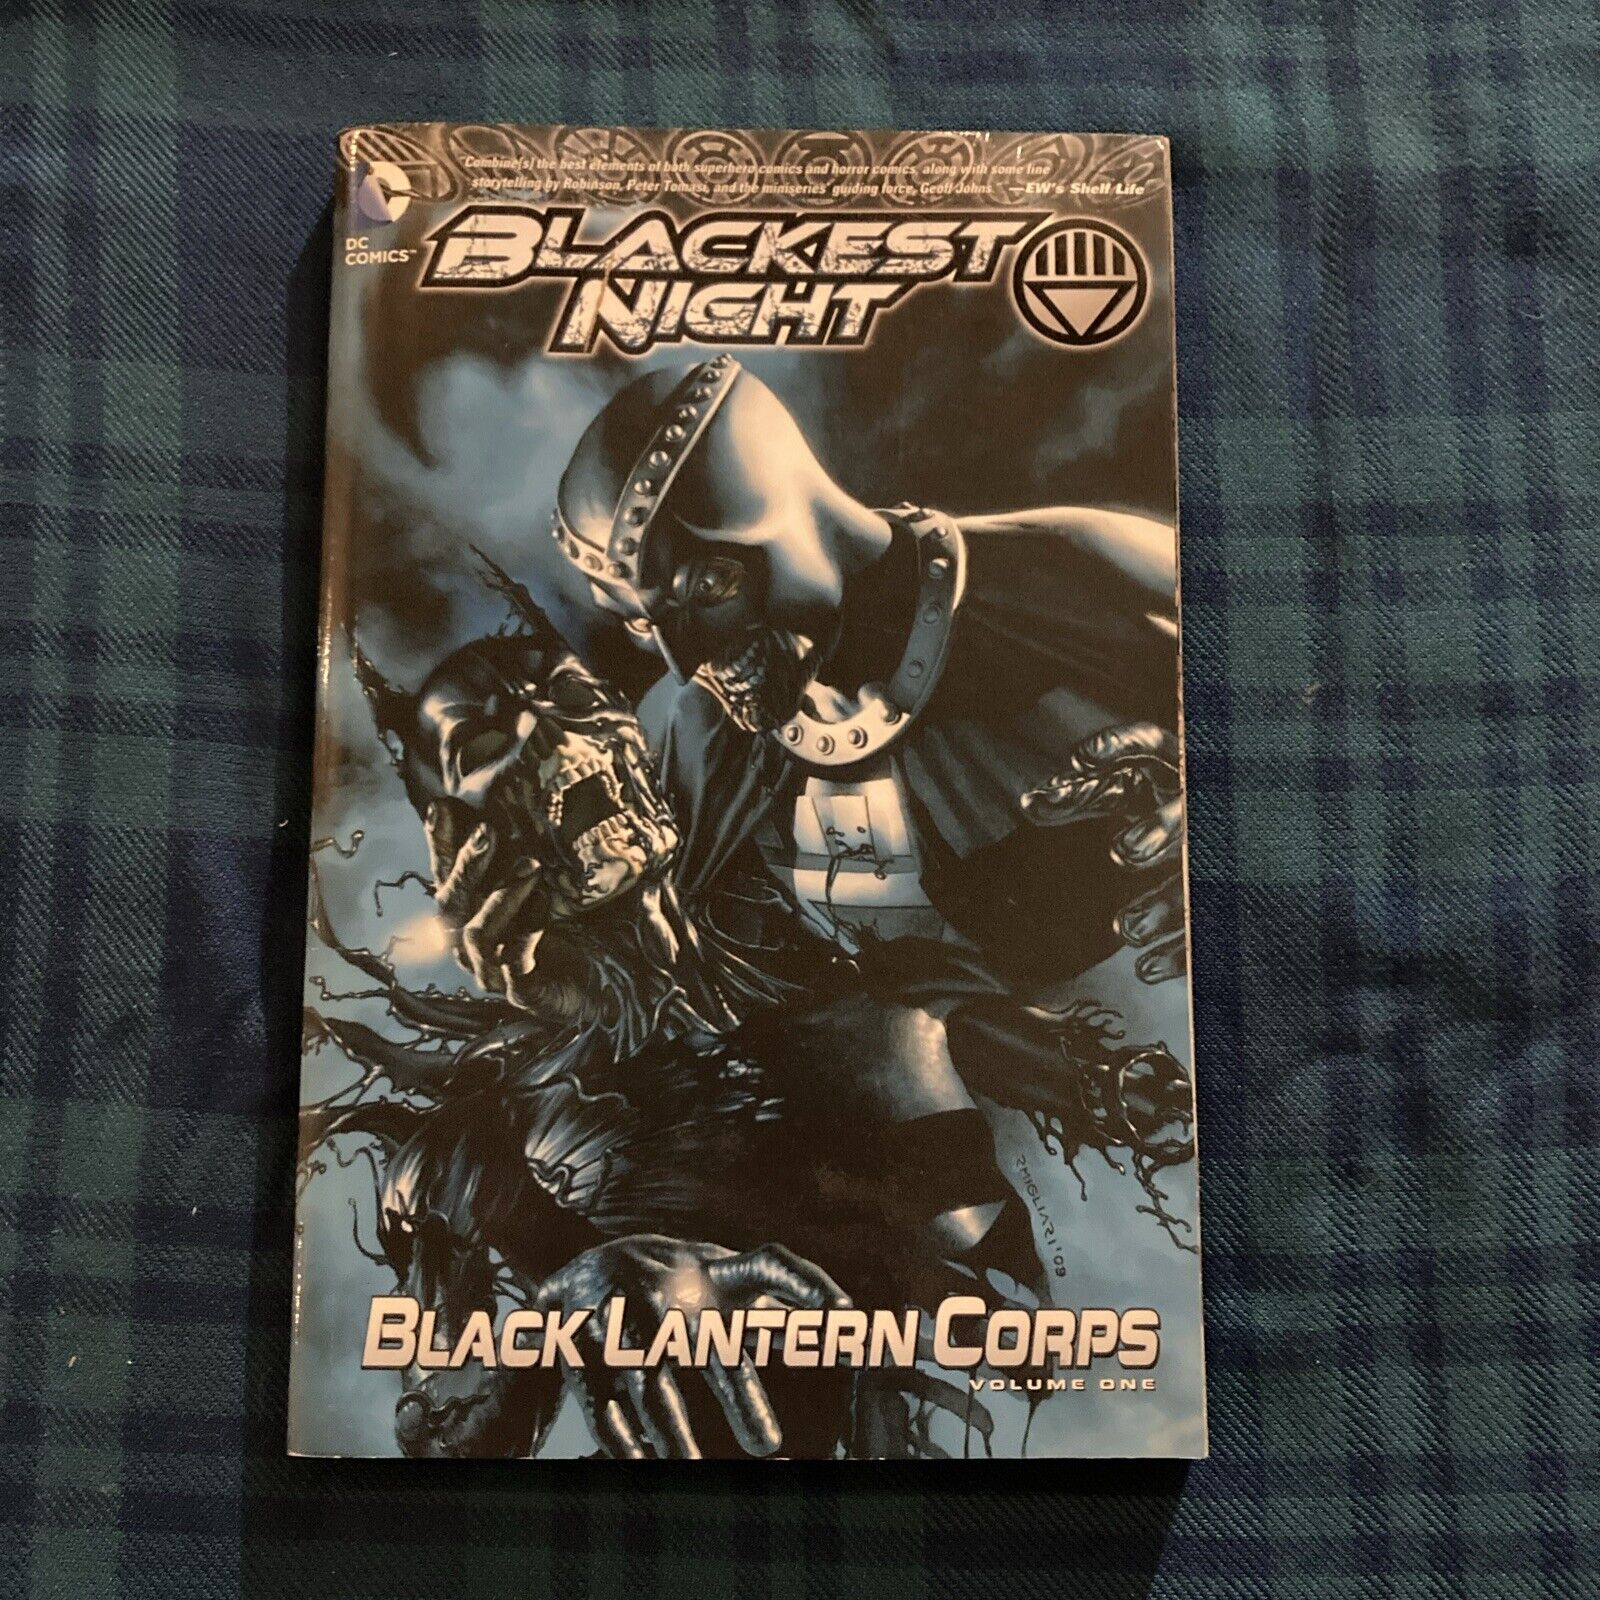 Blackest Night: Black Lantern Corps Trade Paperback Volume 1